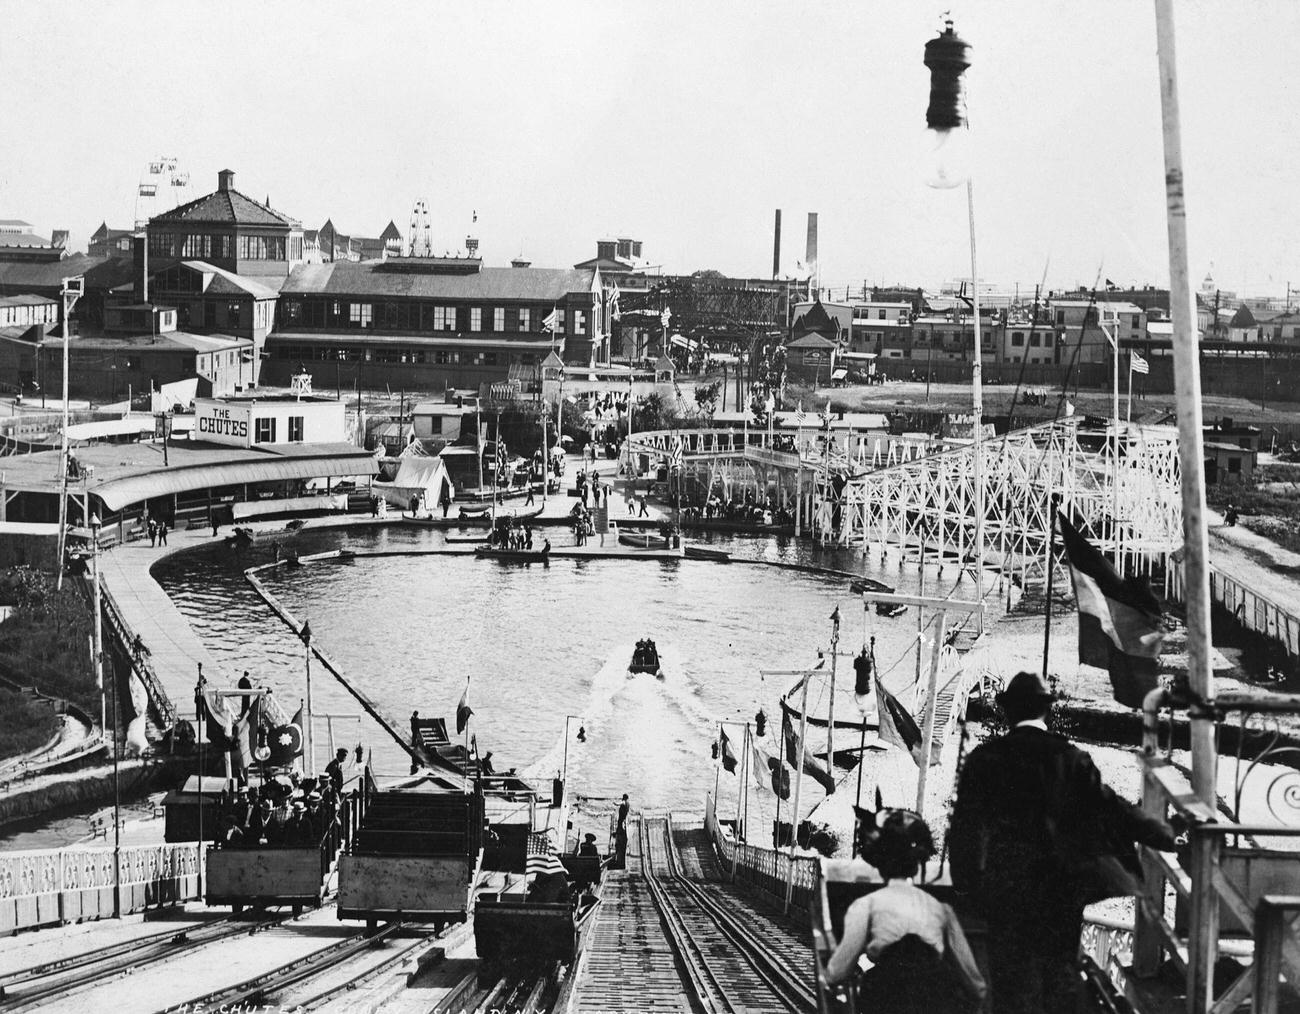 Chute Roller Coaster, 1900